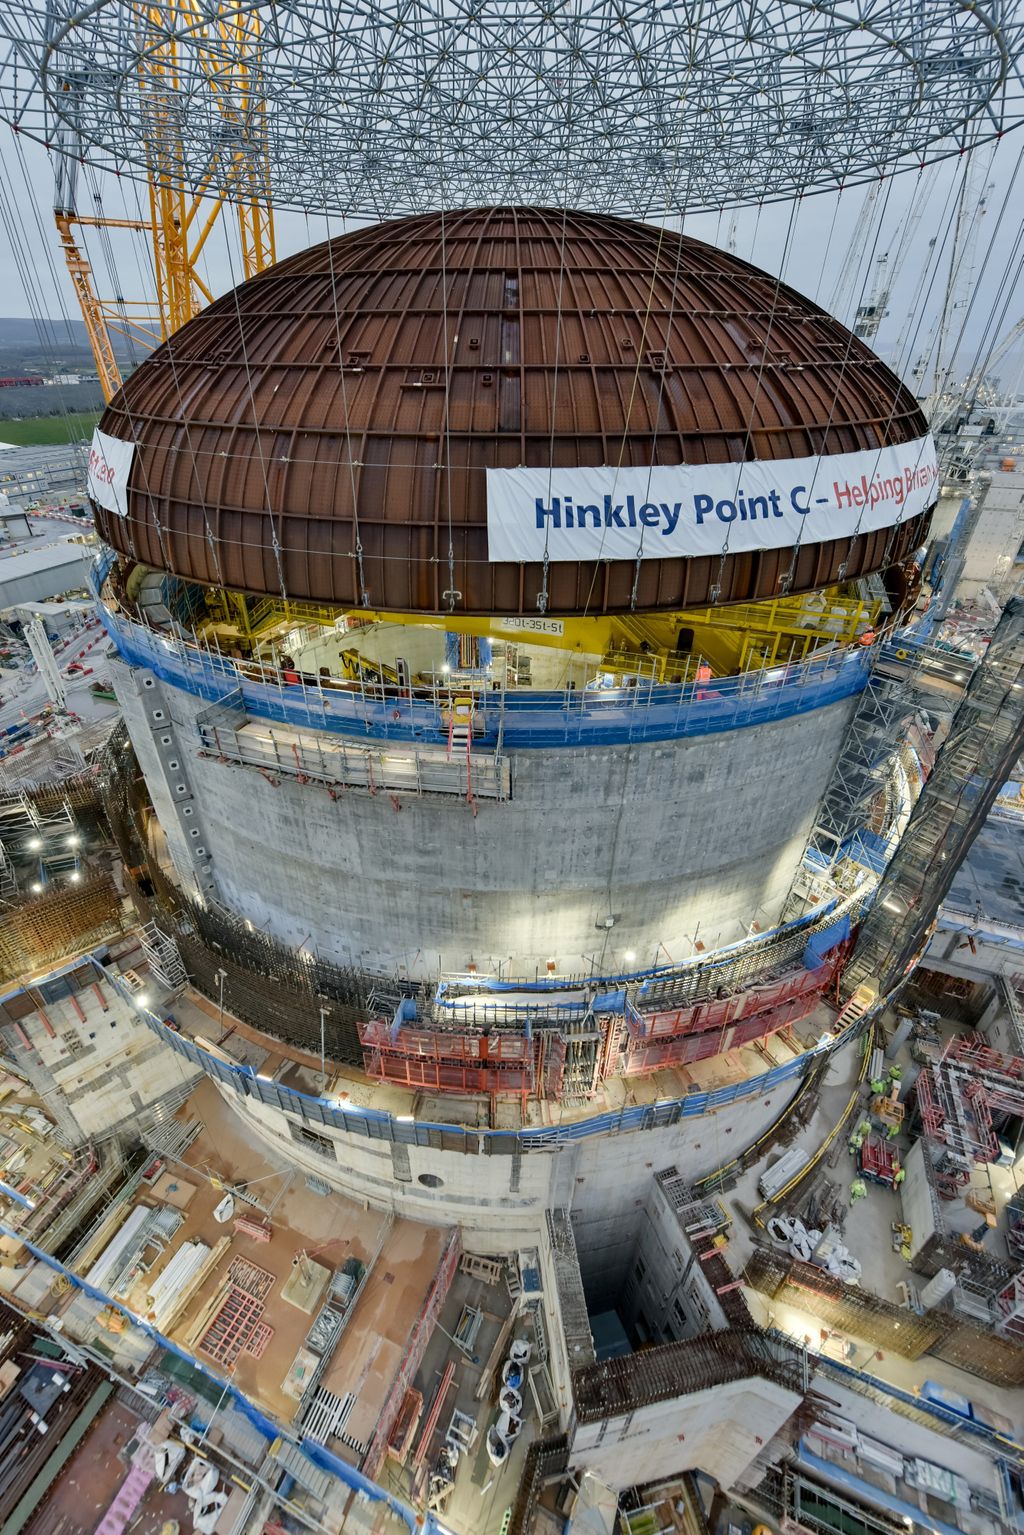 épülő angliai atomerőmű  World's biggest crane lifts spectacular dome onto £26bn nuclear power station South West News Service ODDSHOT 